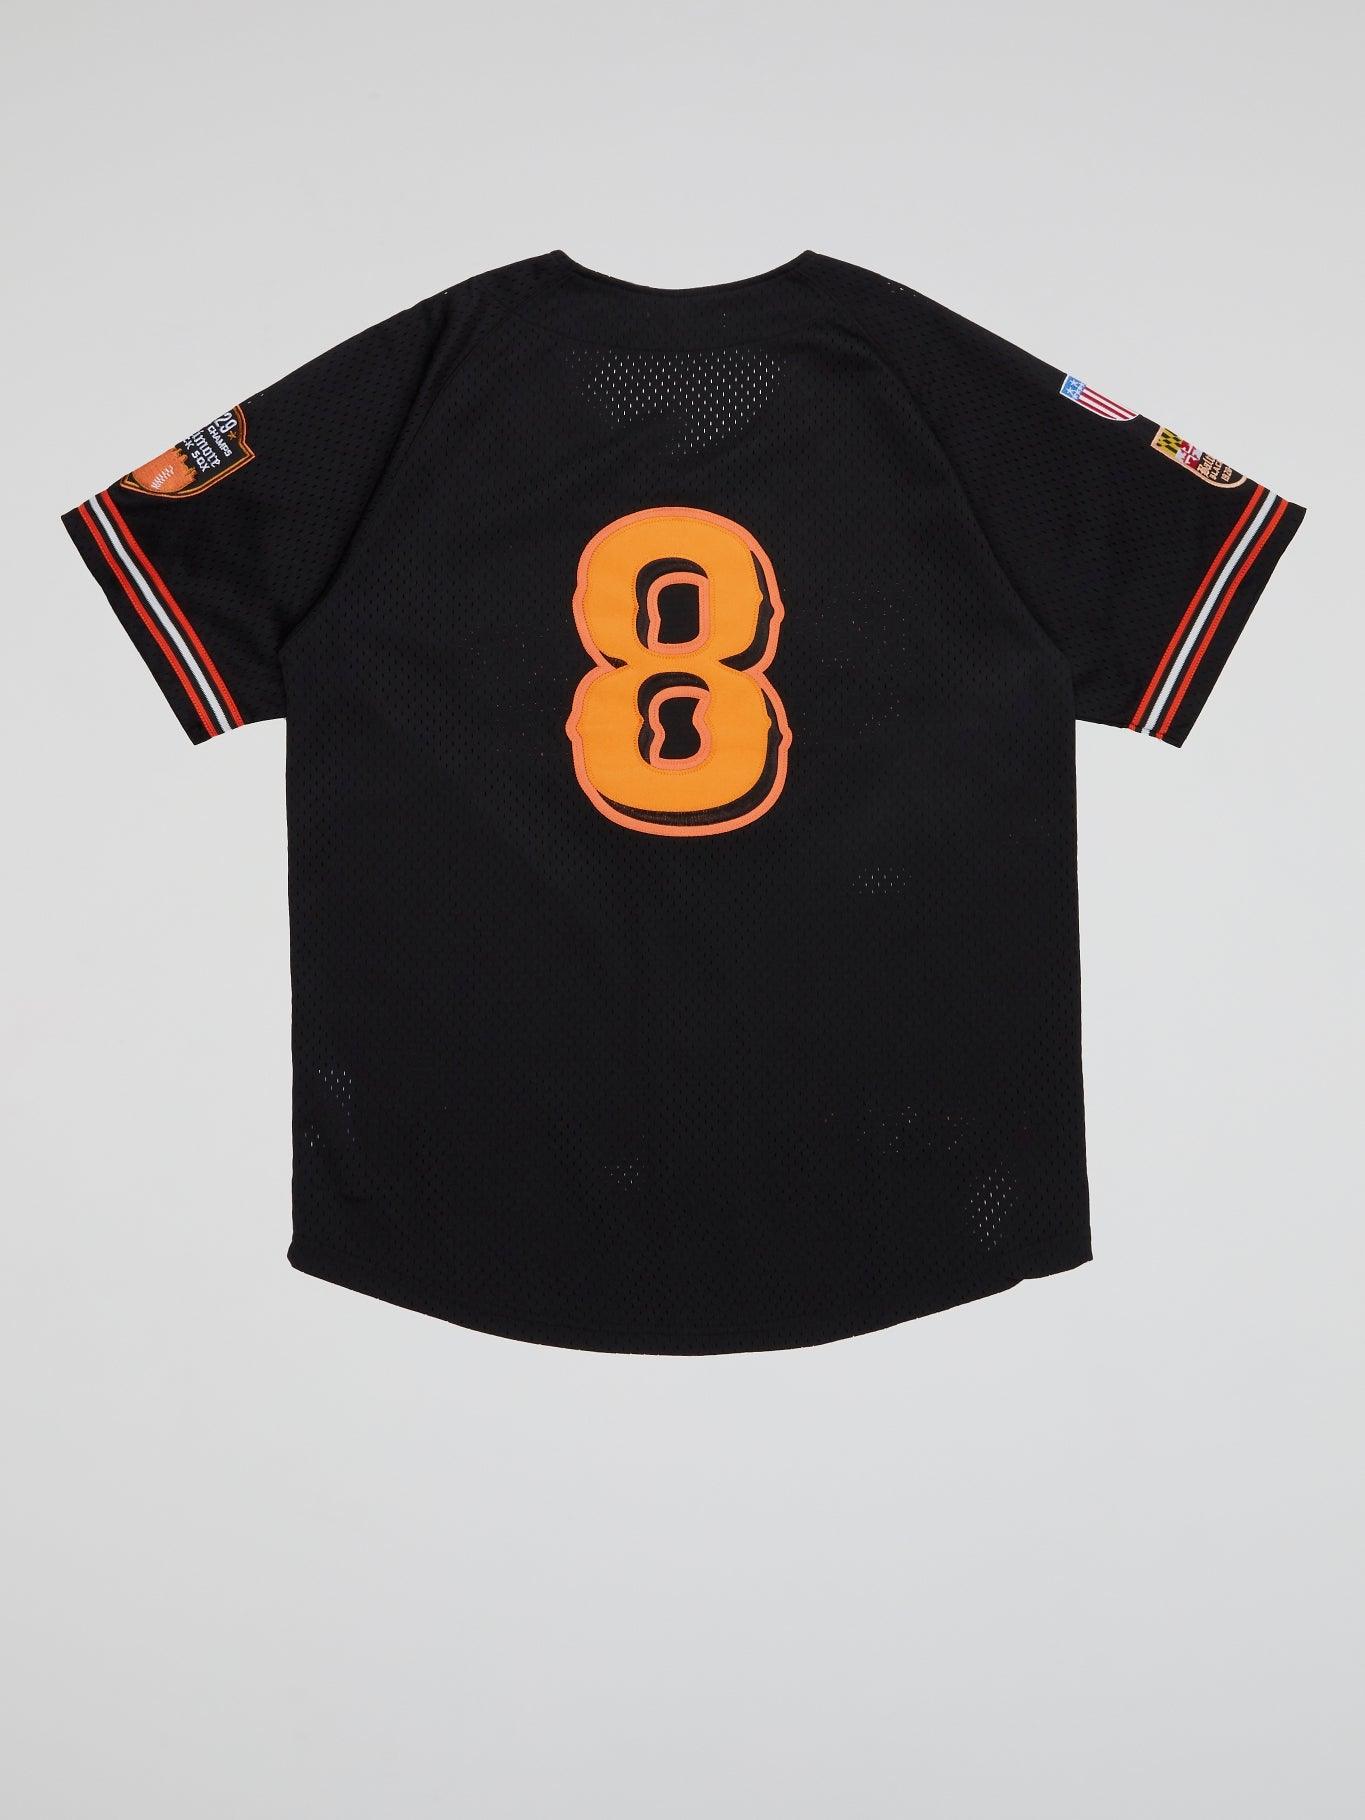 Baltimore Black Sox Button Down Jersey Black - B-Hype Society